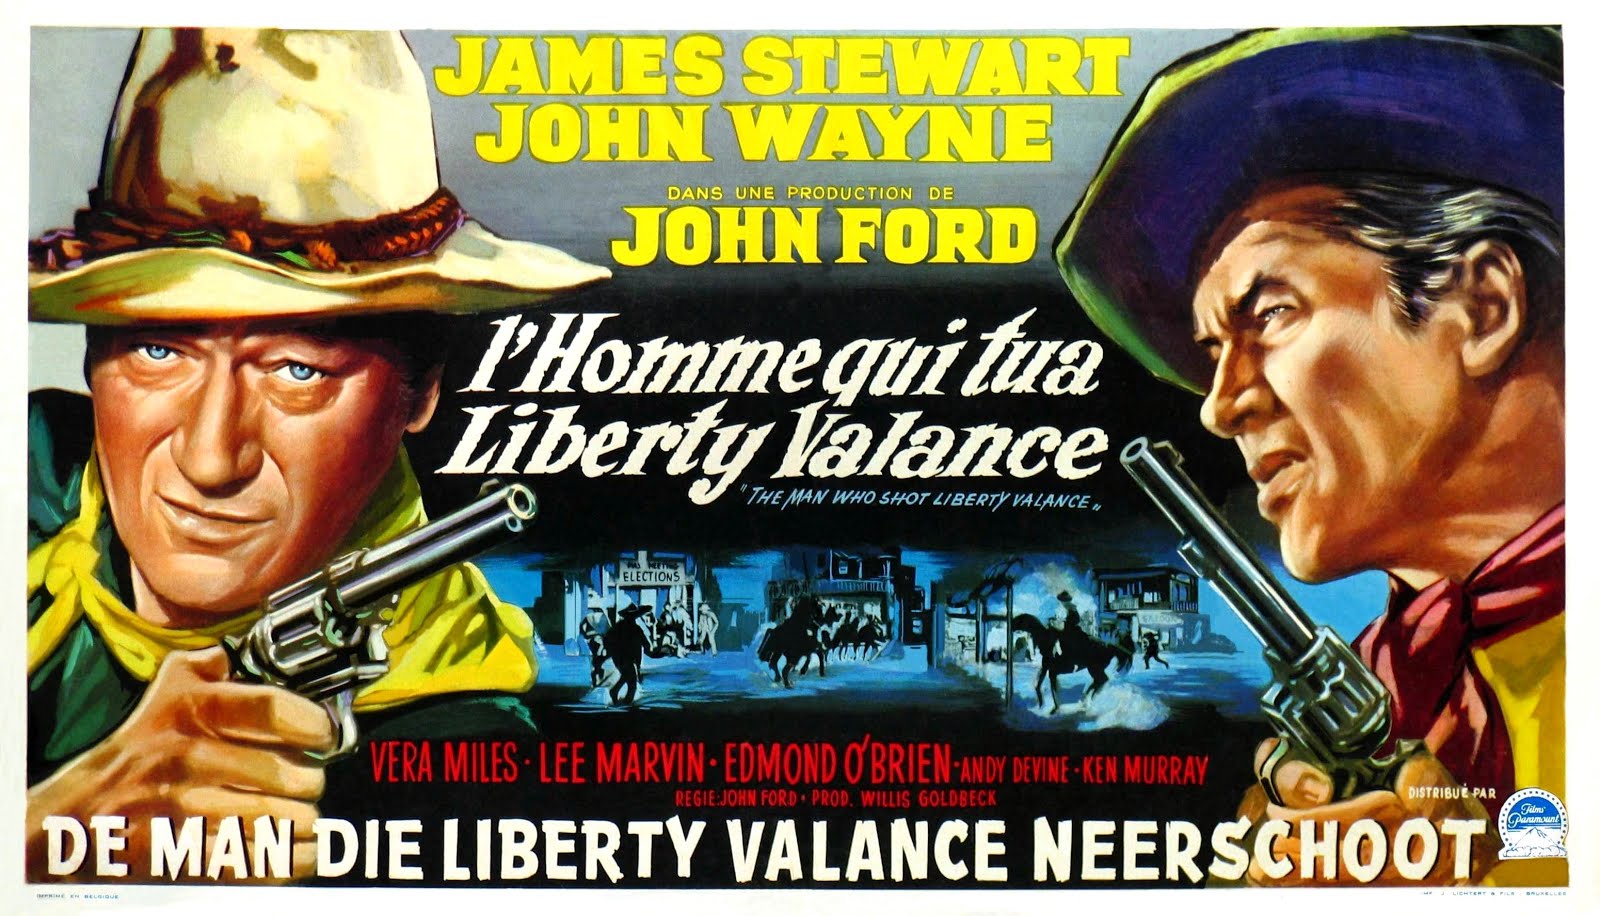 L'homme qui tua Liberty Valance (1961) John Ford - The man who shot Liberty Valance